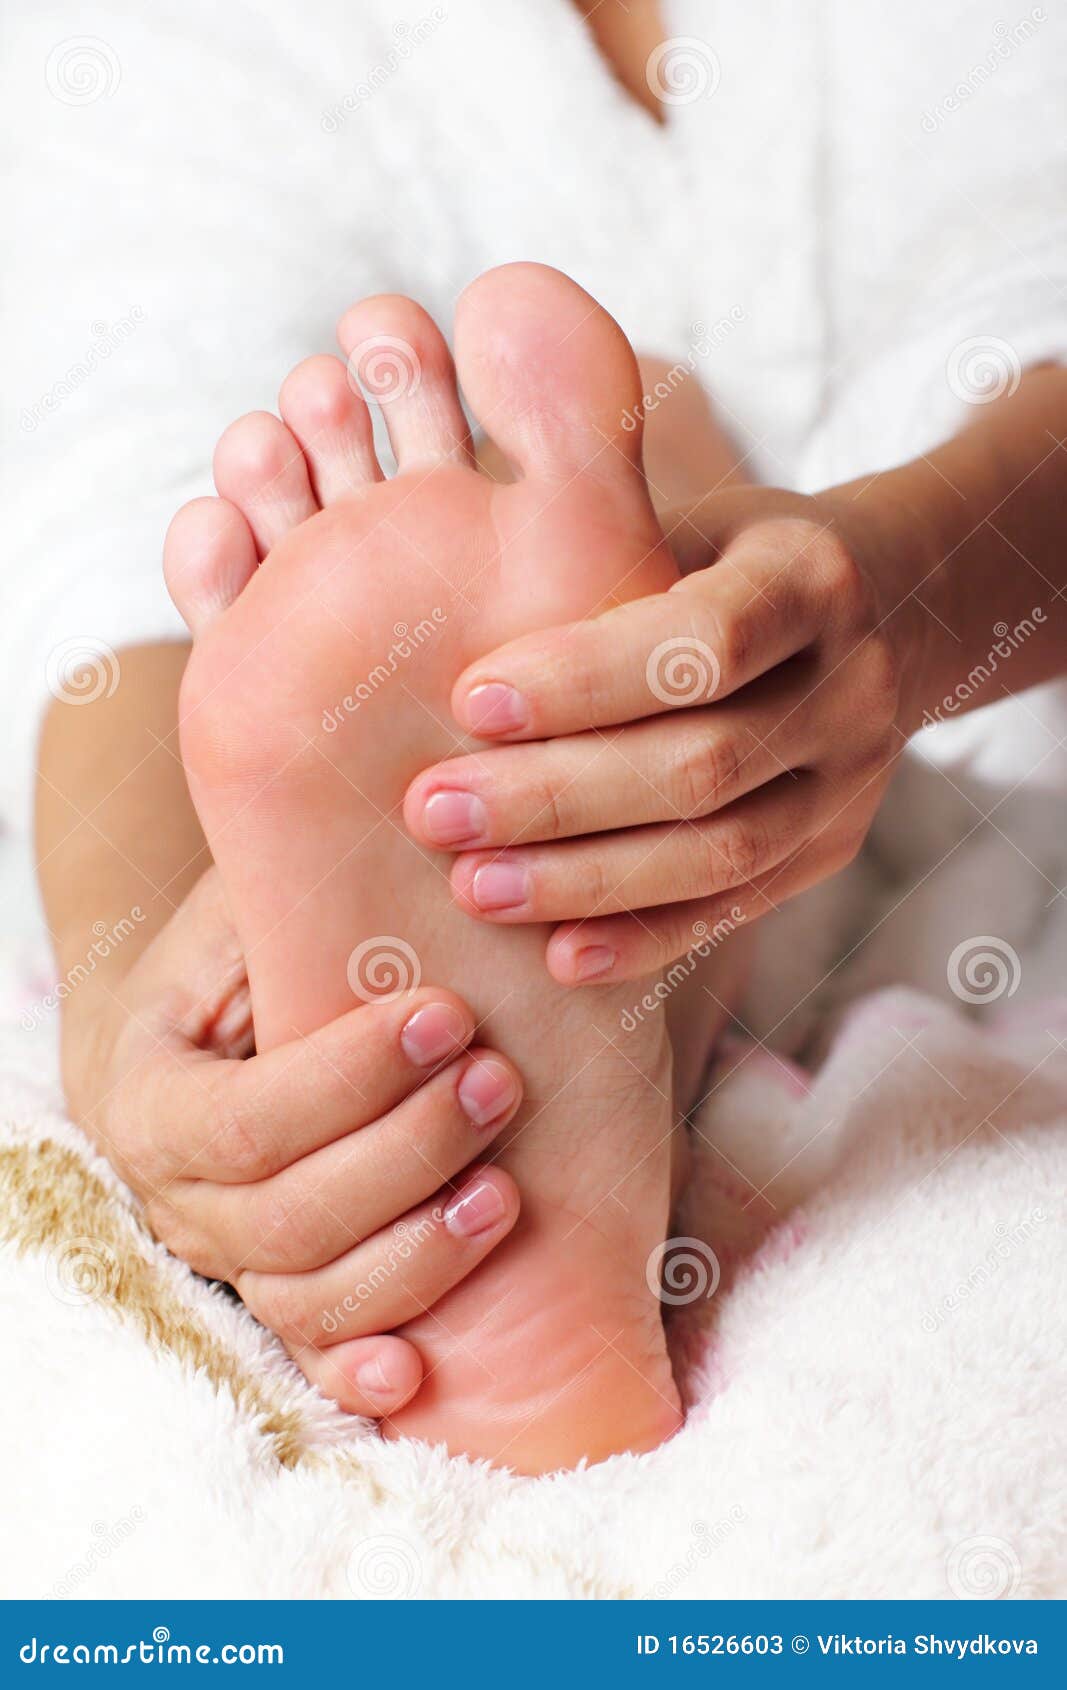 woman massaging his feet